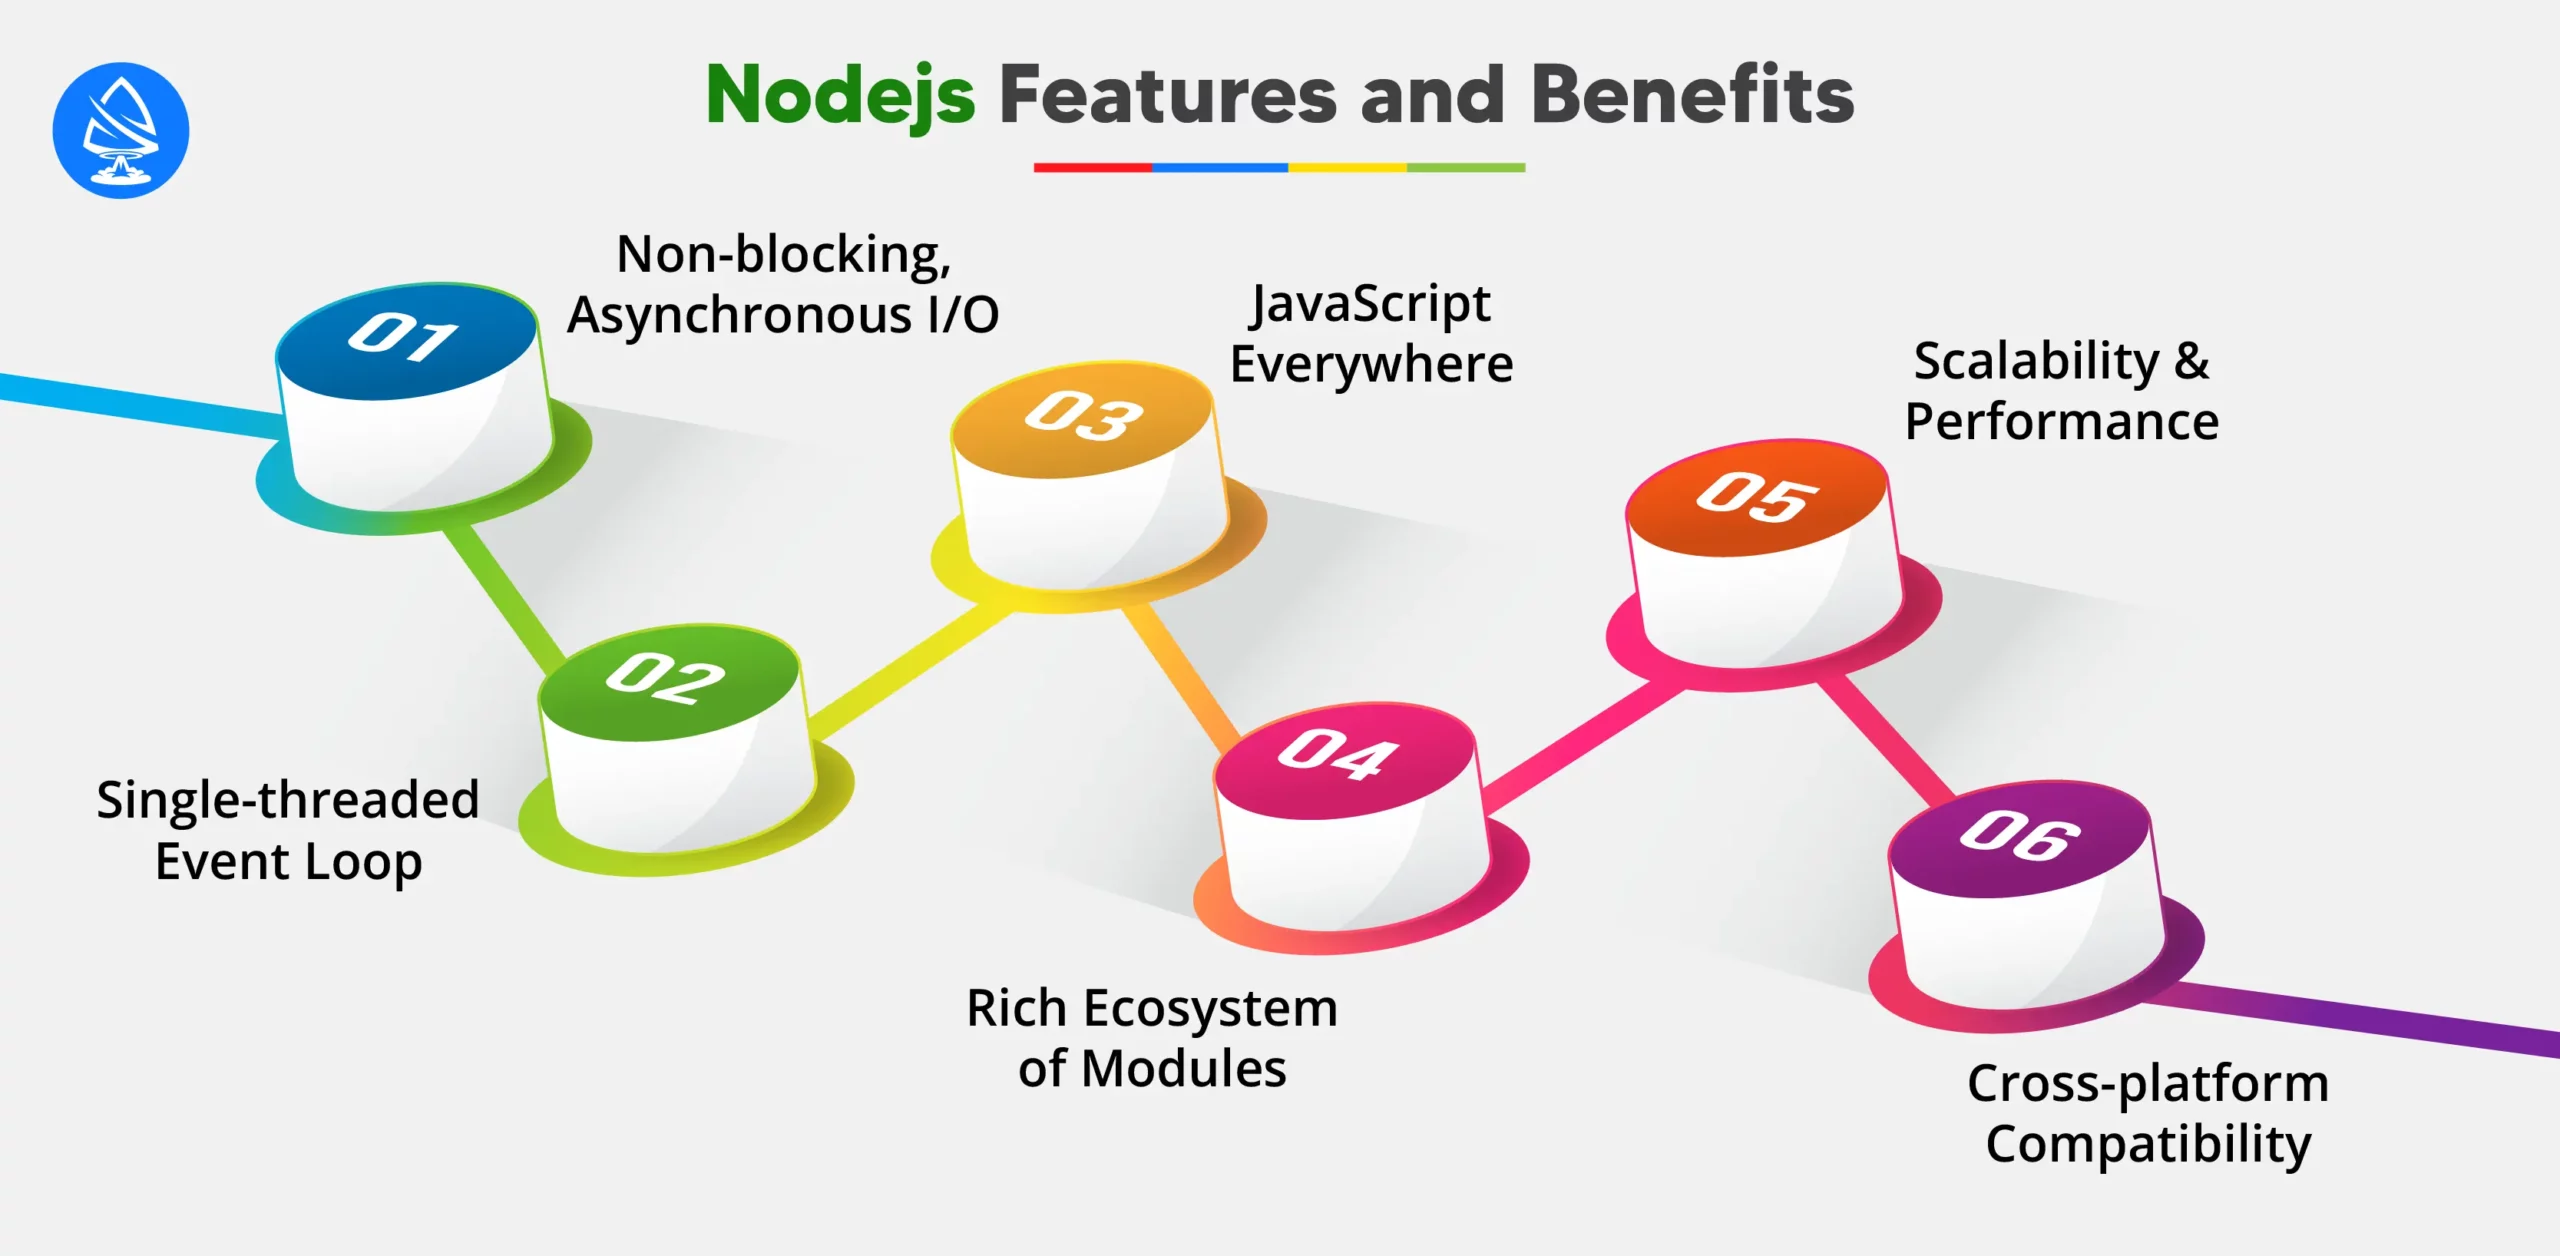 Nodejs Features and Benefits 